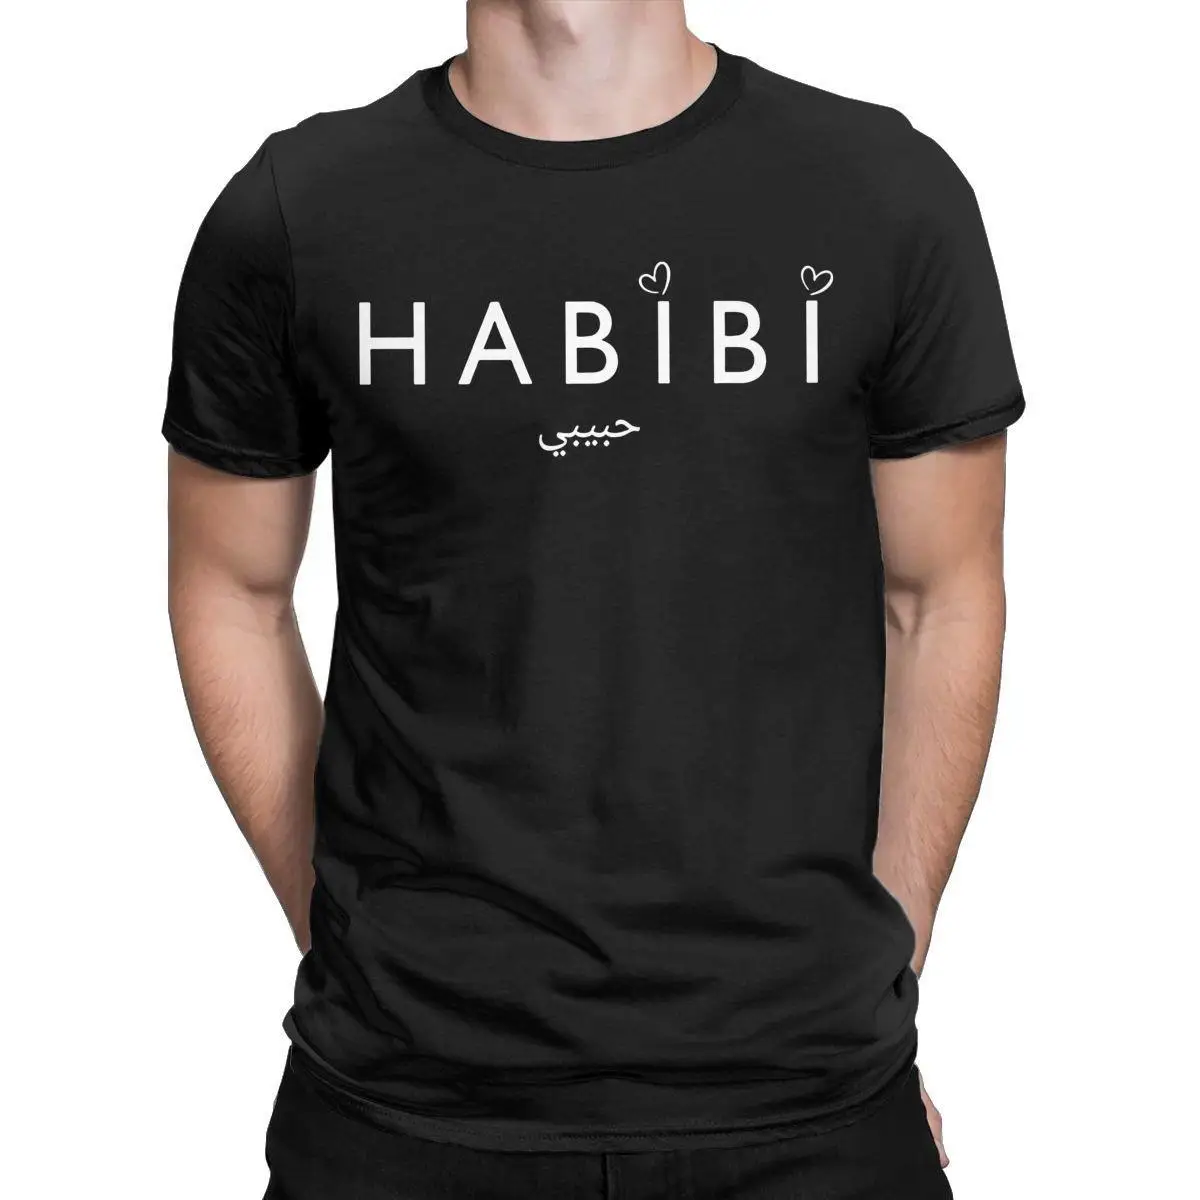 Men's Habibi Habibati Optical Illisions T Shirts 100% Cotton Tops Leisure Short Sleeve Round Neck Tee Shirt Printed T-Shirts